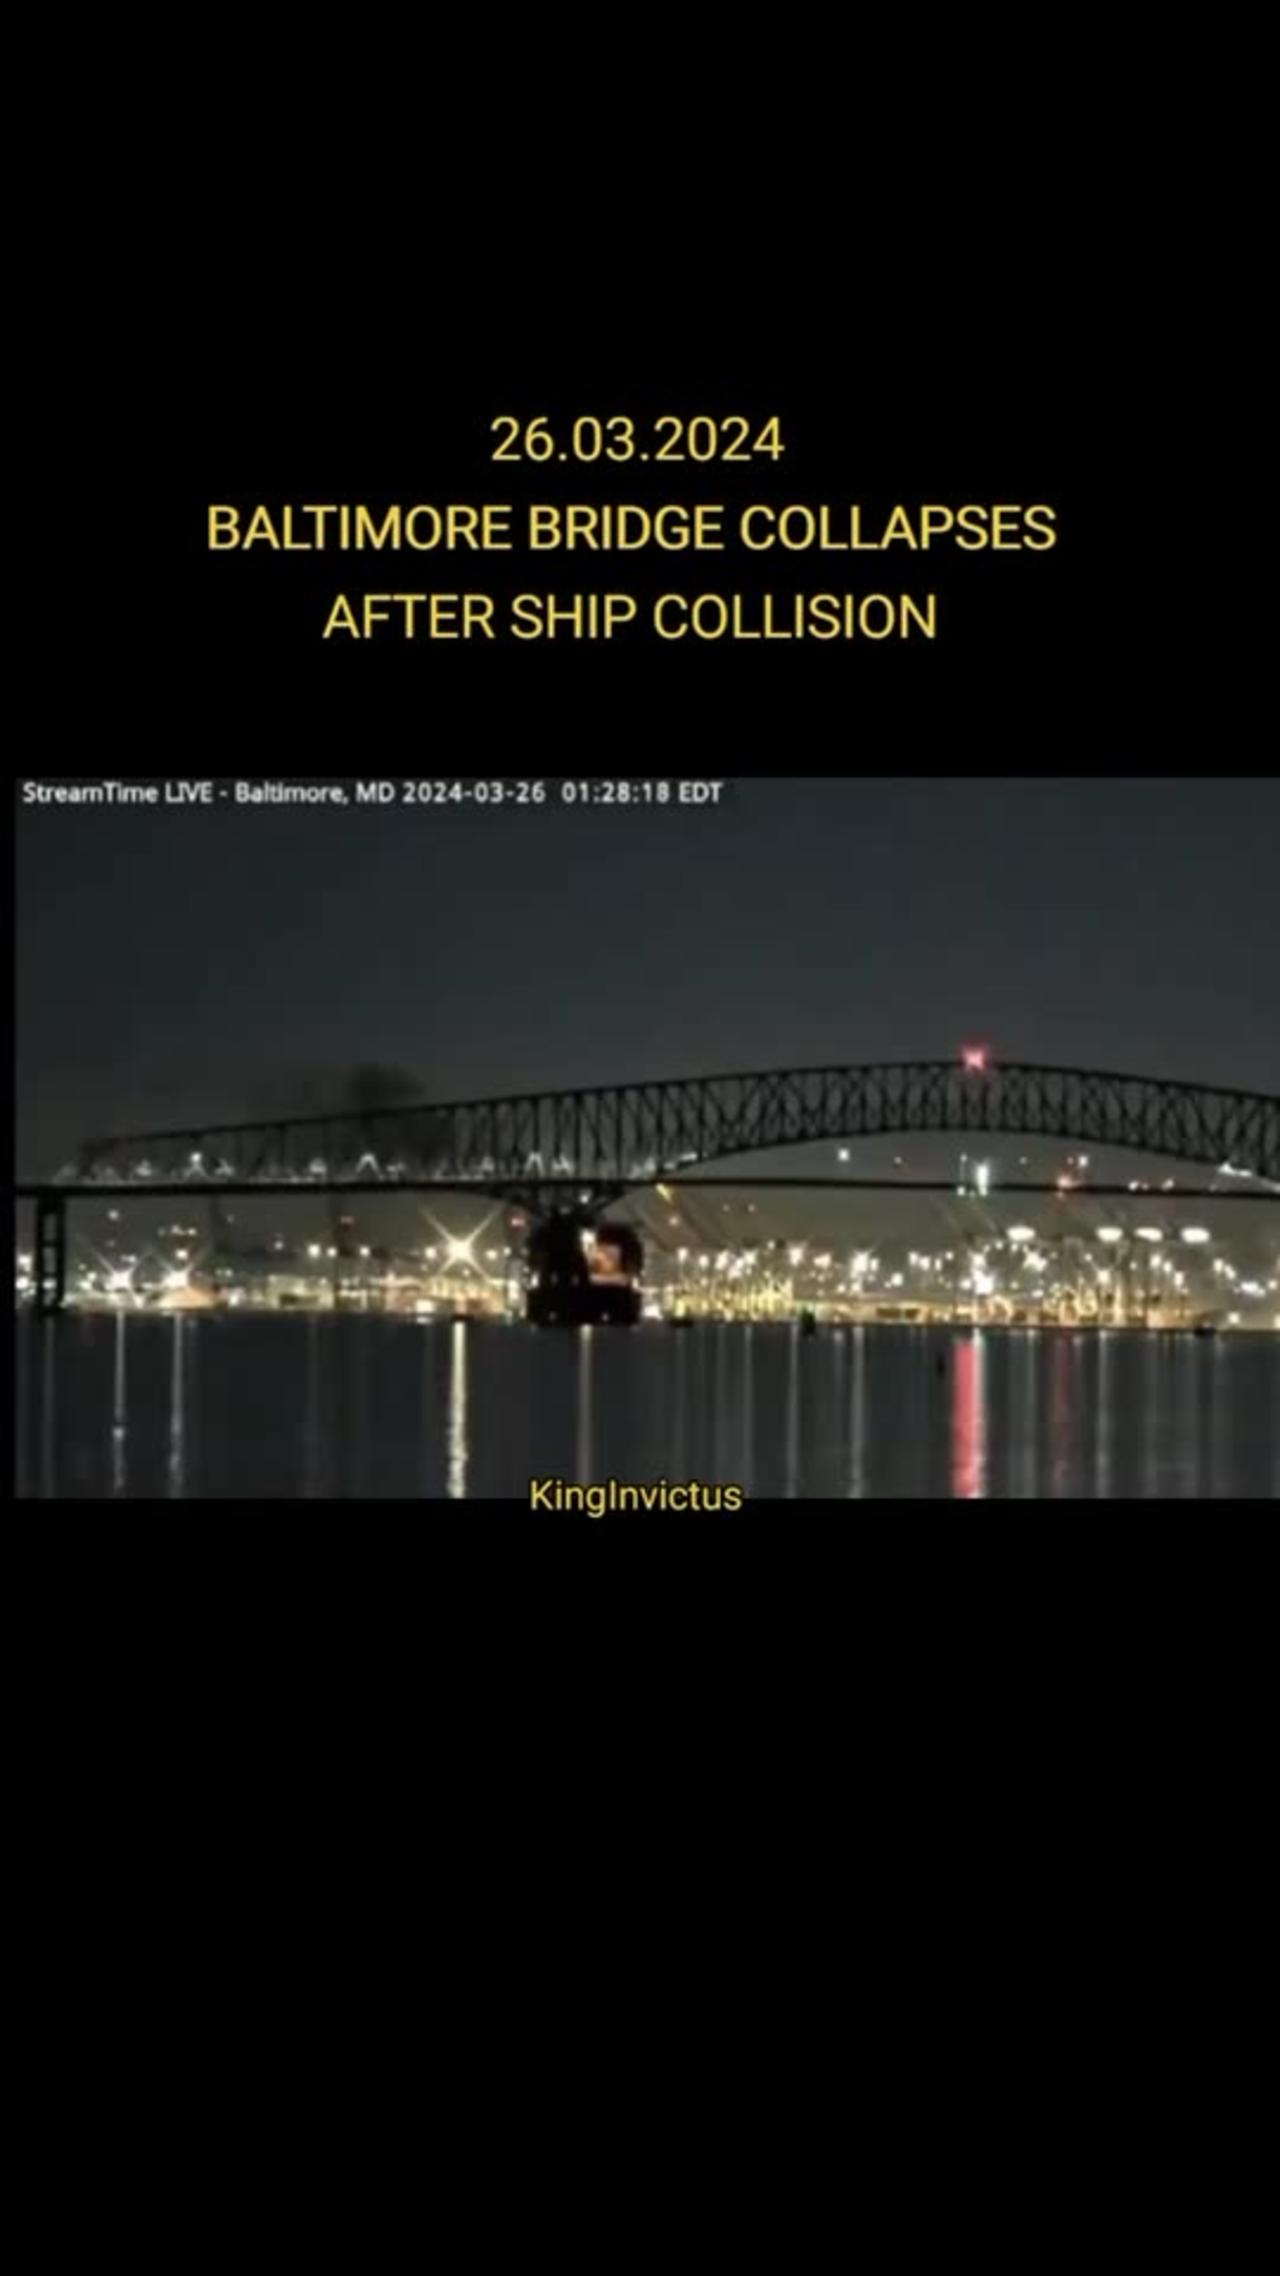 BALTIMORE BRIDGE COLLAPSES AFTER SHIP COLLISION